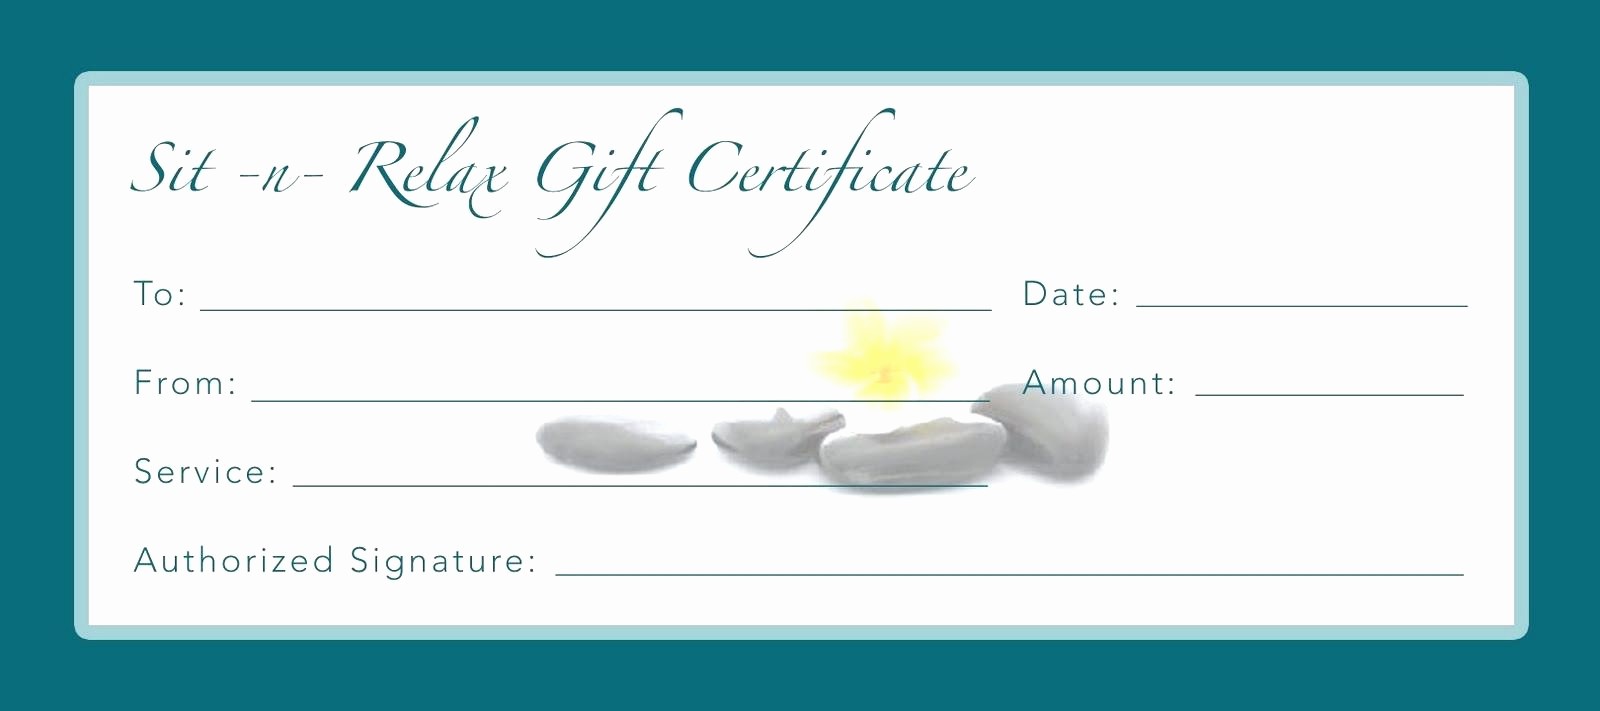 Generic Gift Certificates Print Free New Generic Gift Certificate Template Free Gift Ftempo